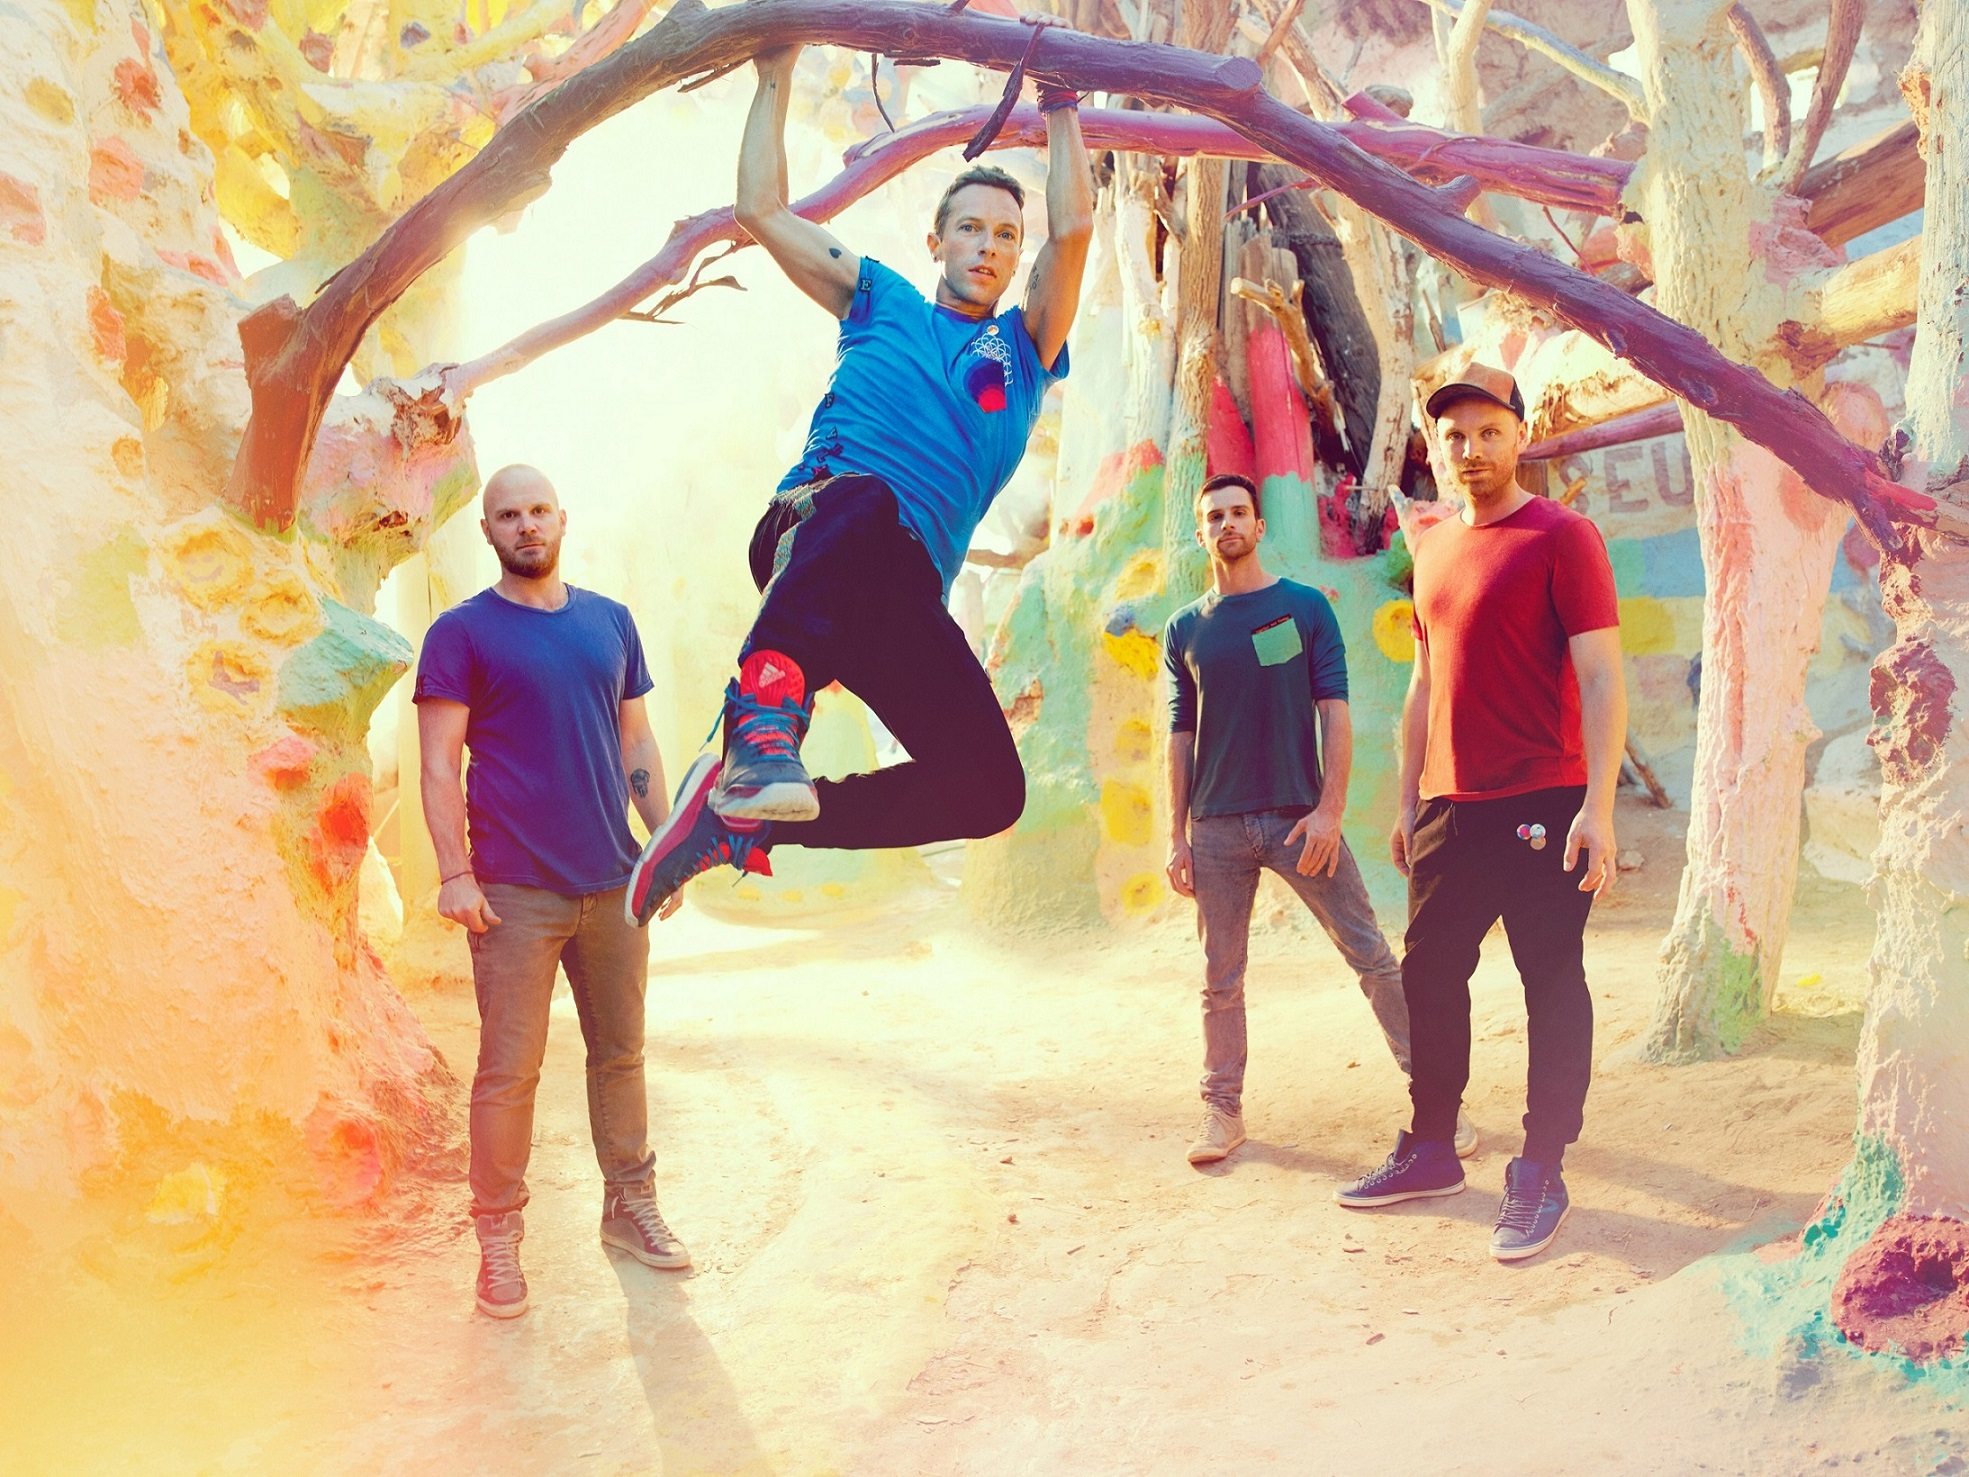 Coldplay speelt adembenemende Linkin Park cover